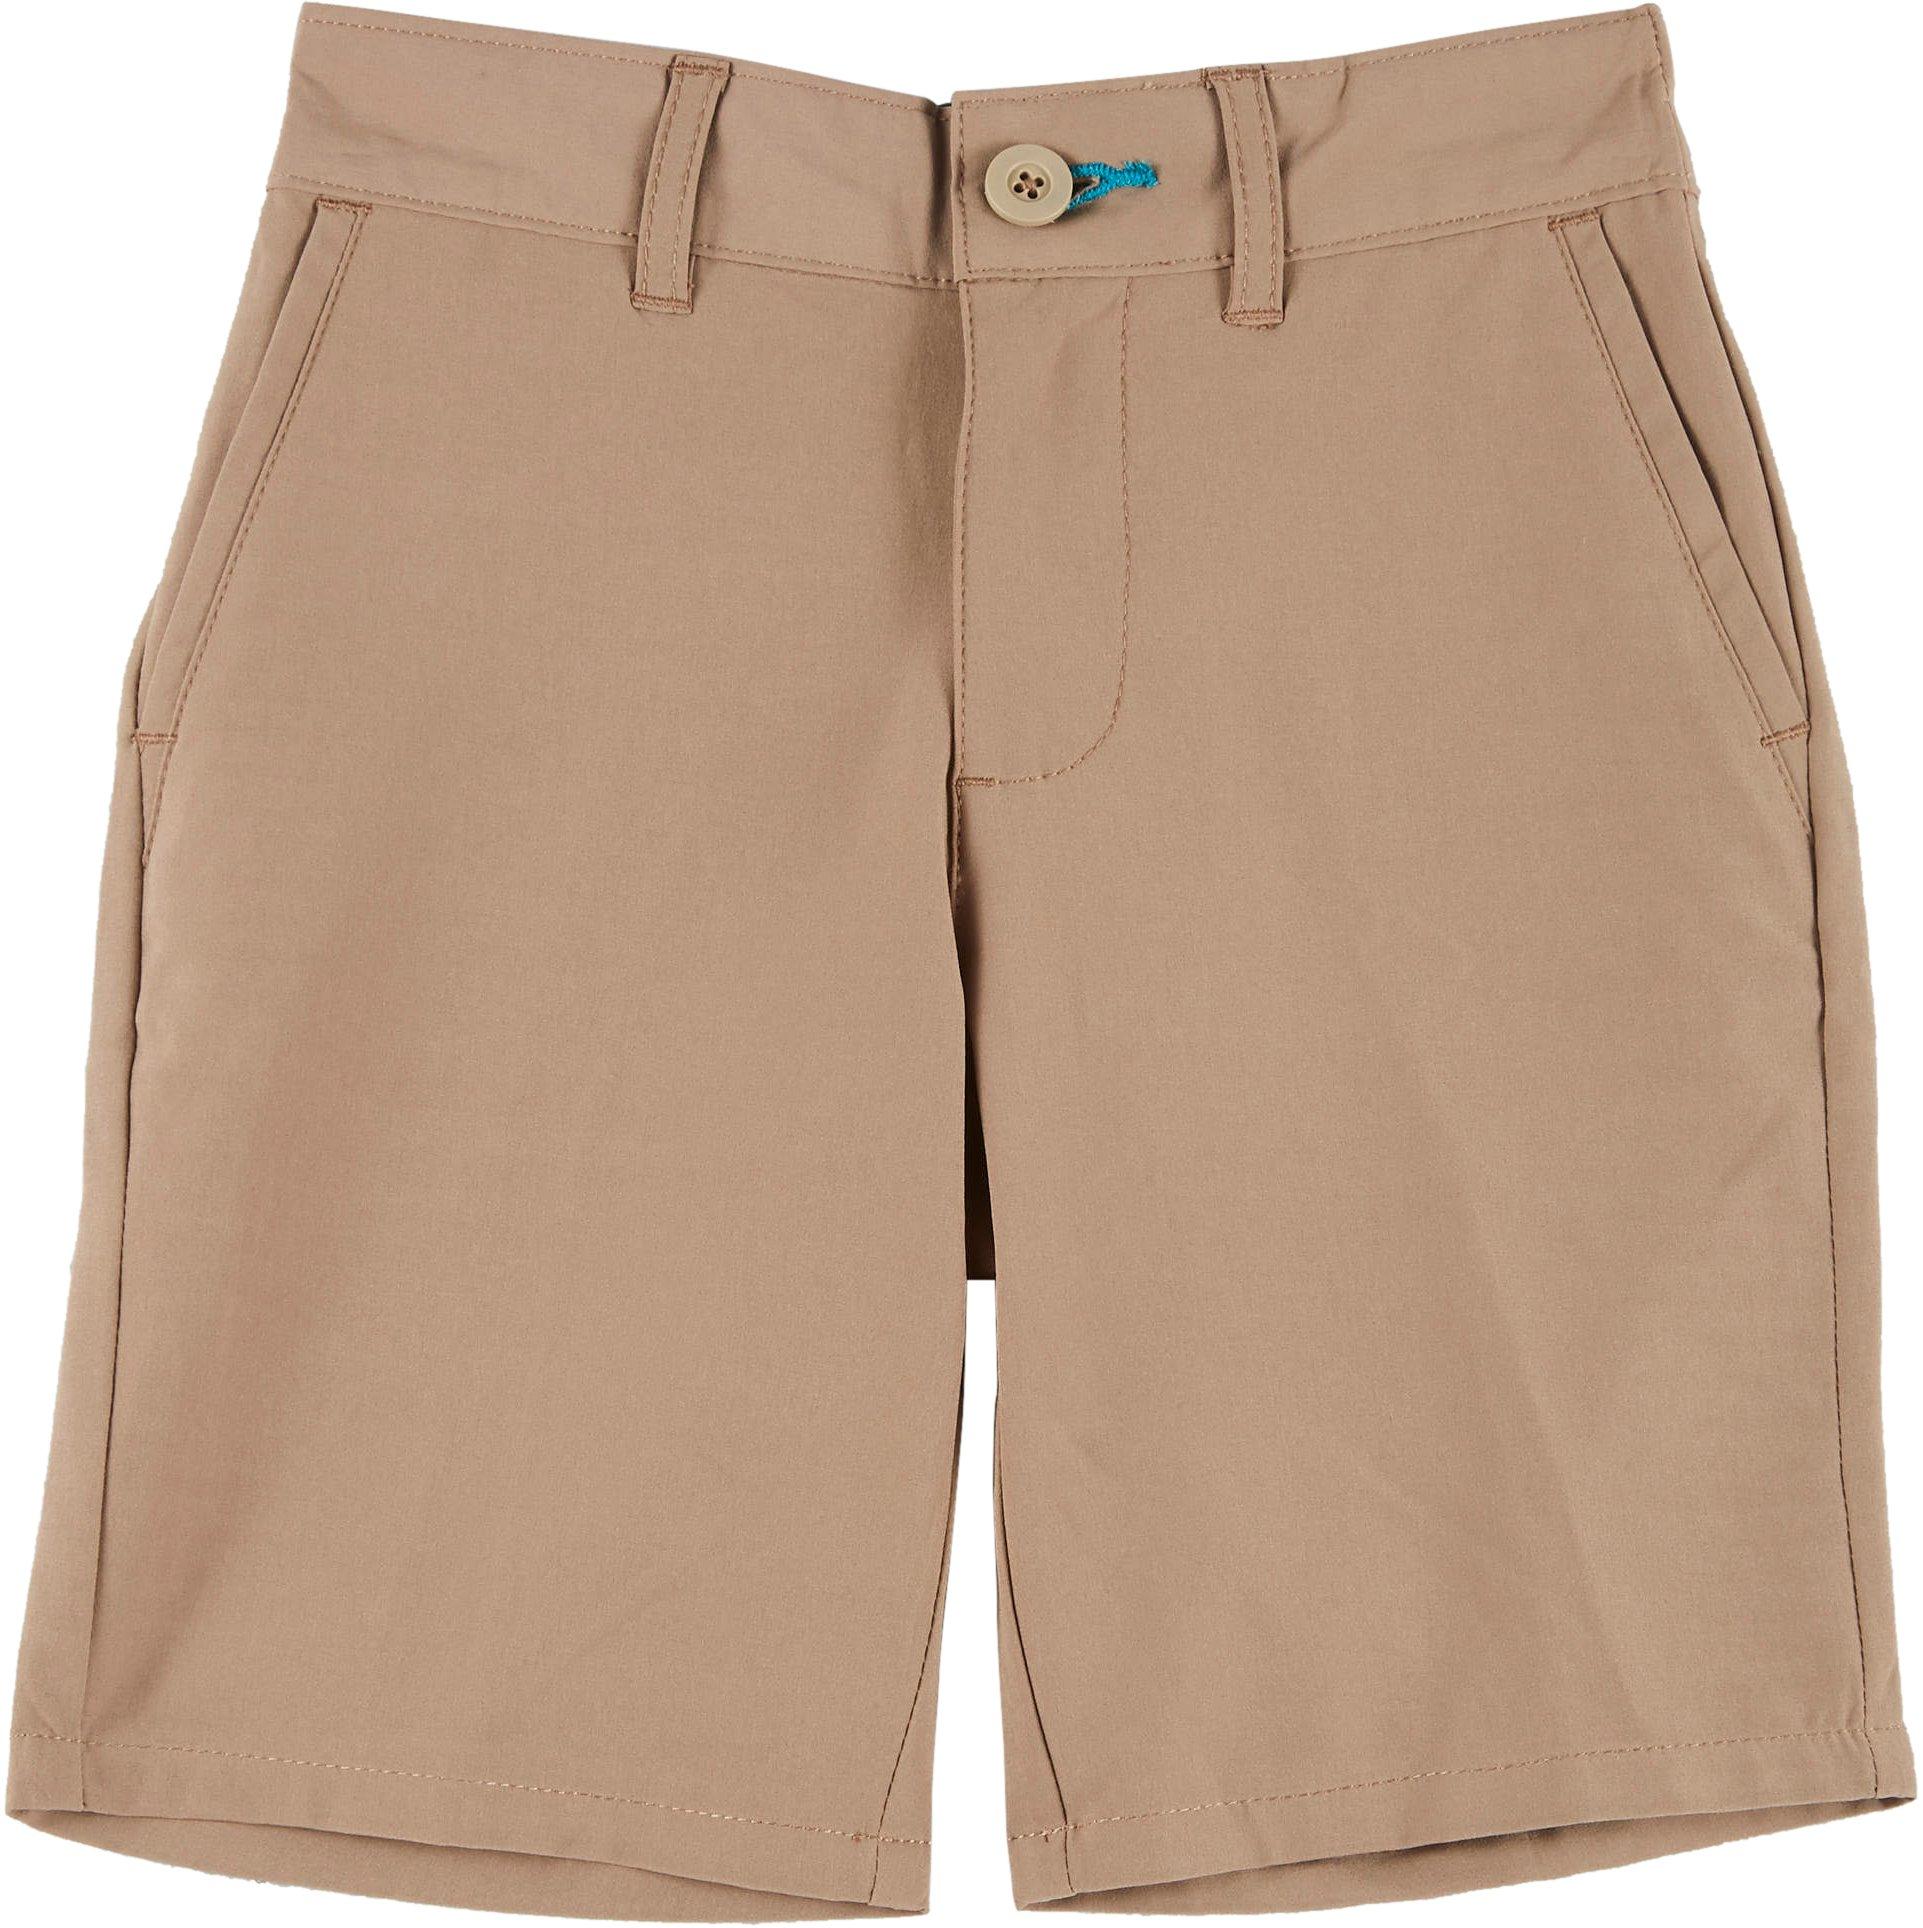 Boys Clothes Boys Tees Shorts Jeans Bealls Florida - roblox brown cargo shorts